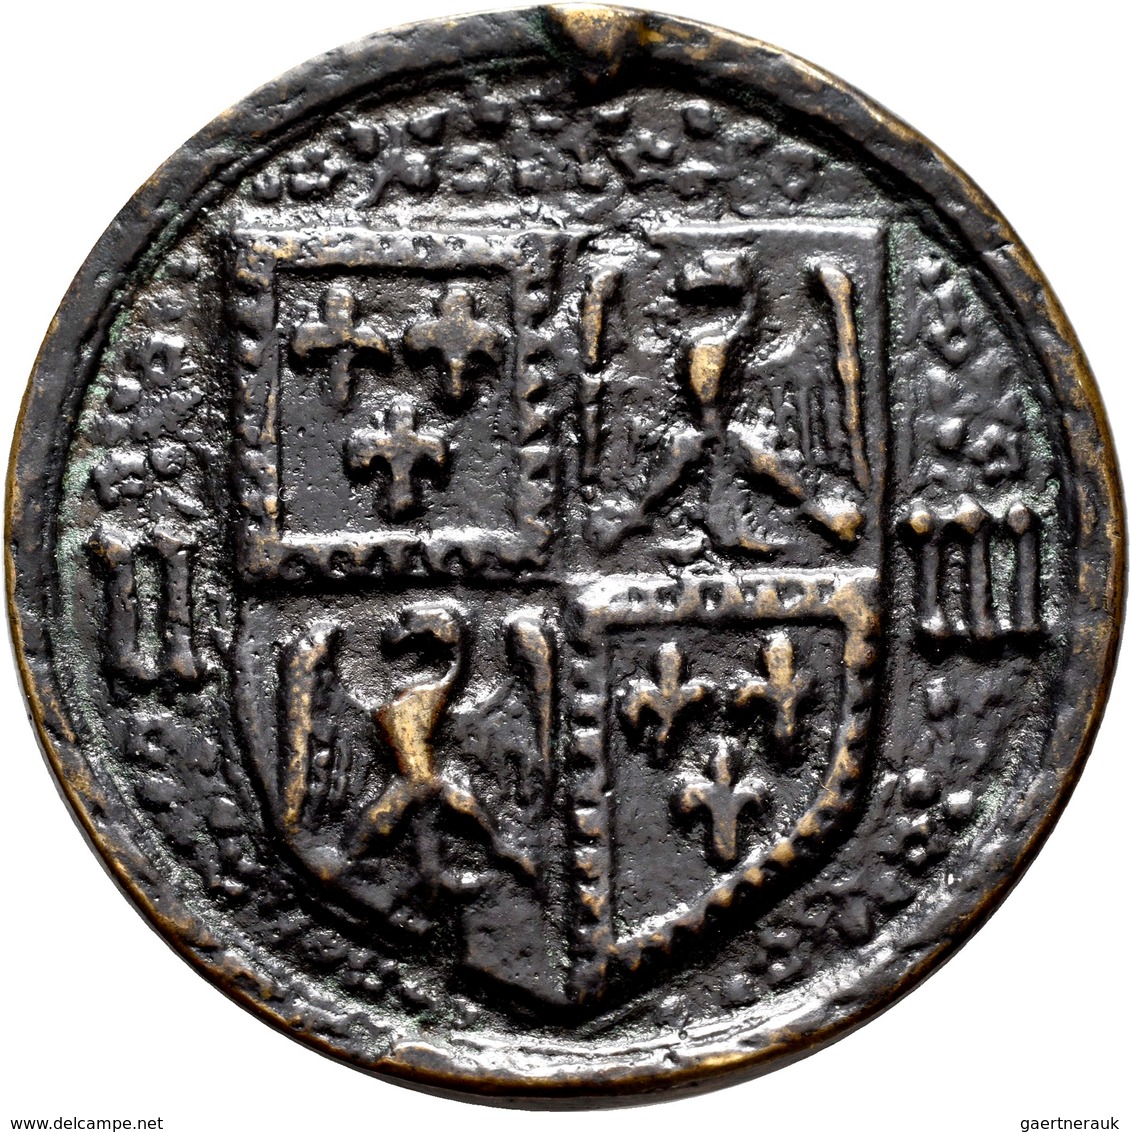 Medaillen Alle Welt: Italien-Ferrara, Niccolo III. D'Este 1383-1441: Bronzegussmedaille O. J. Von Am - Ohne Zuordnung